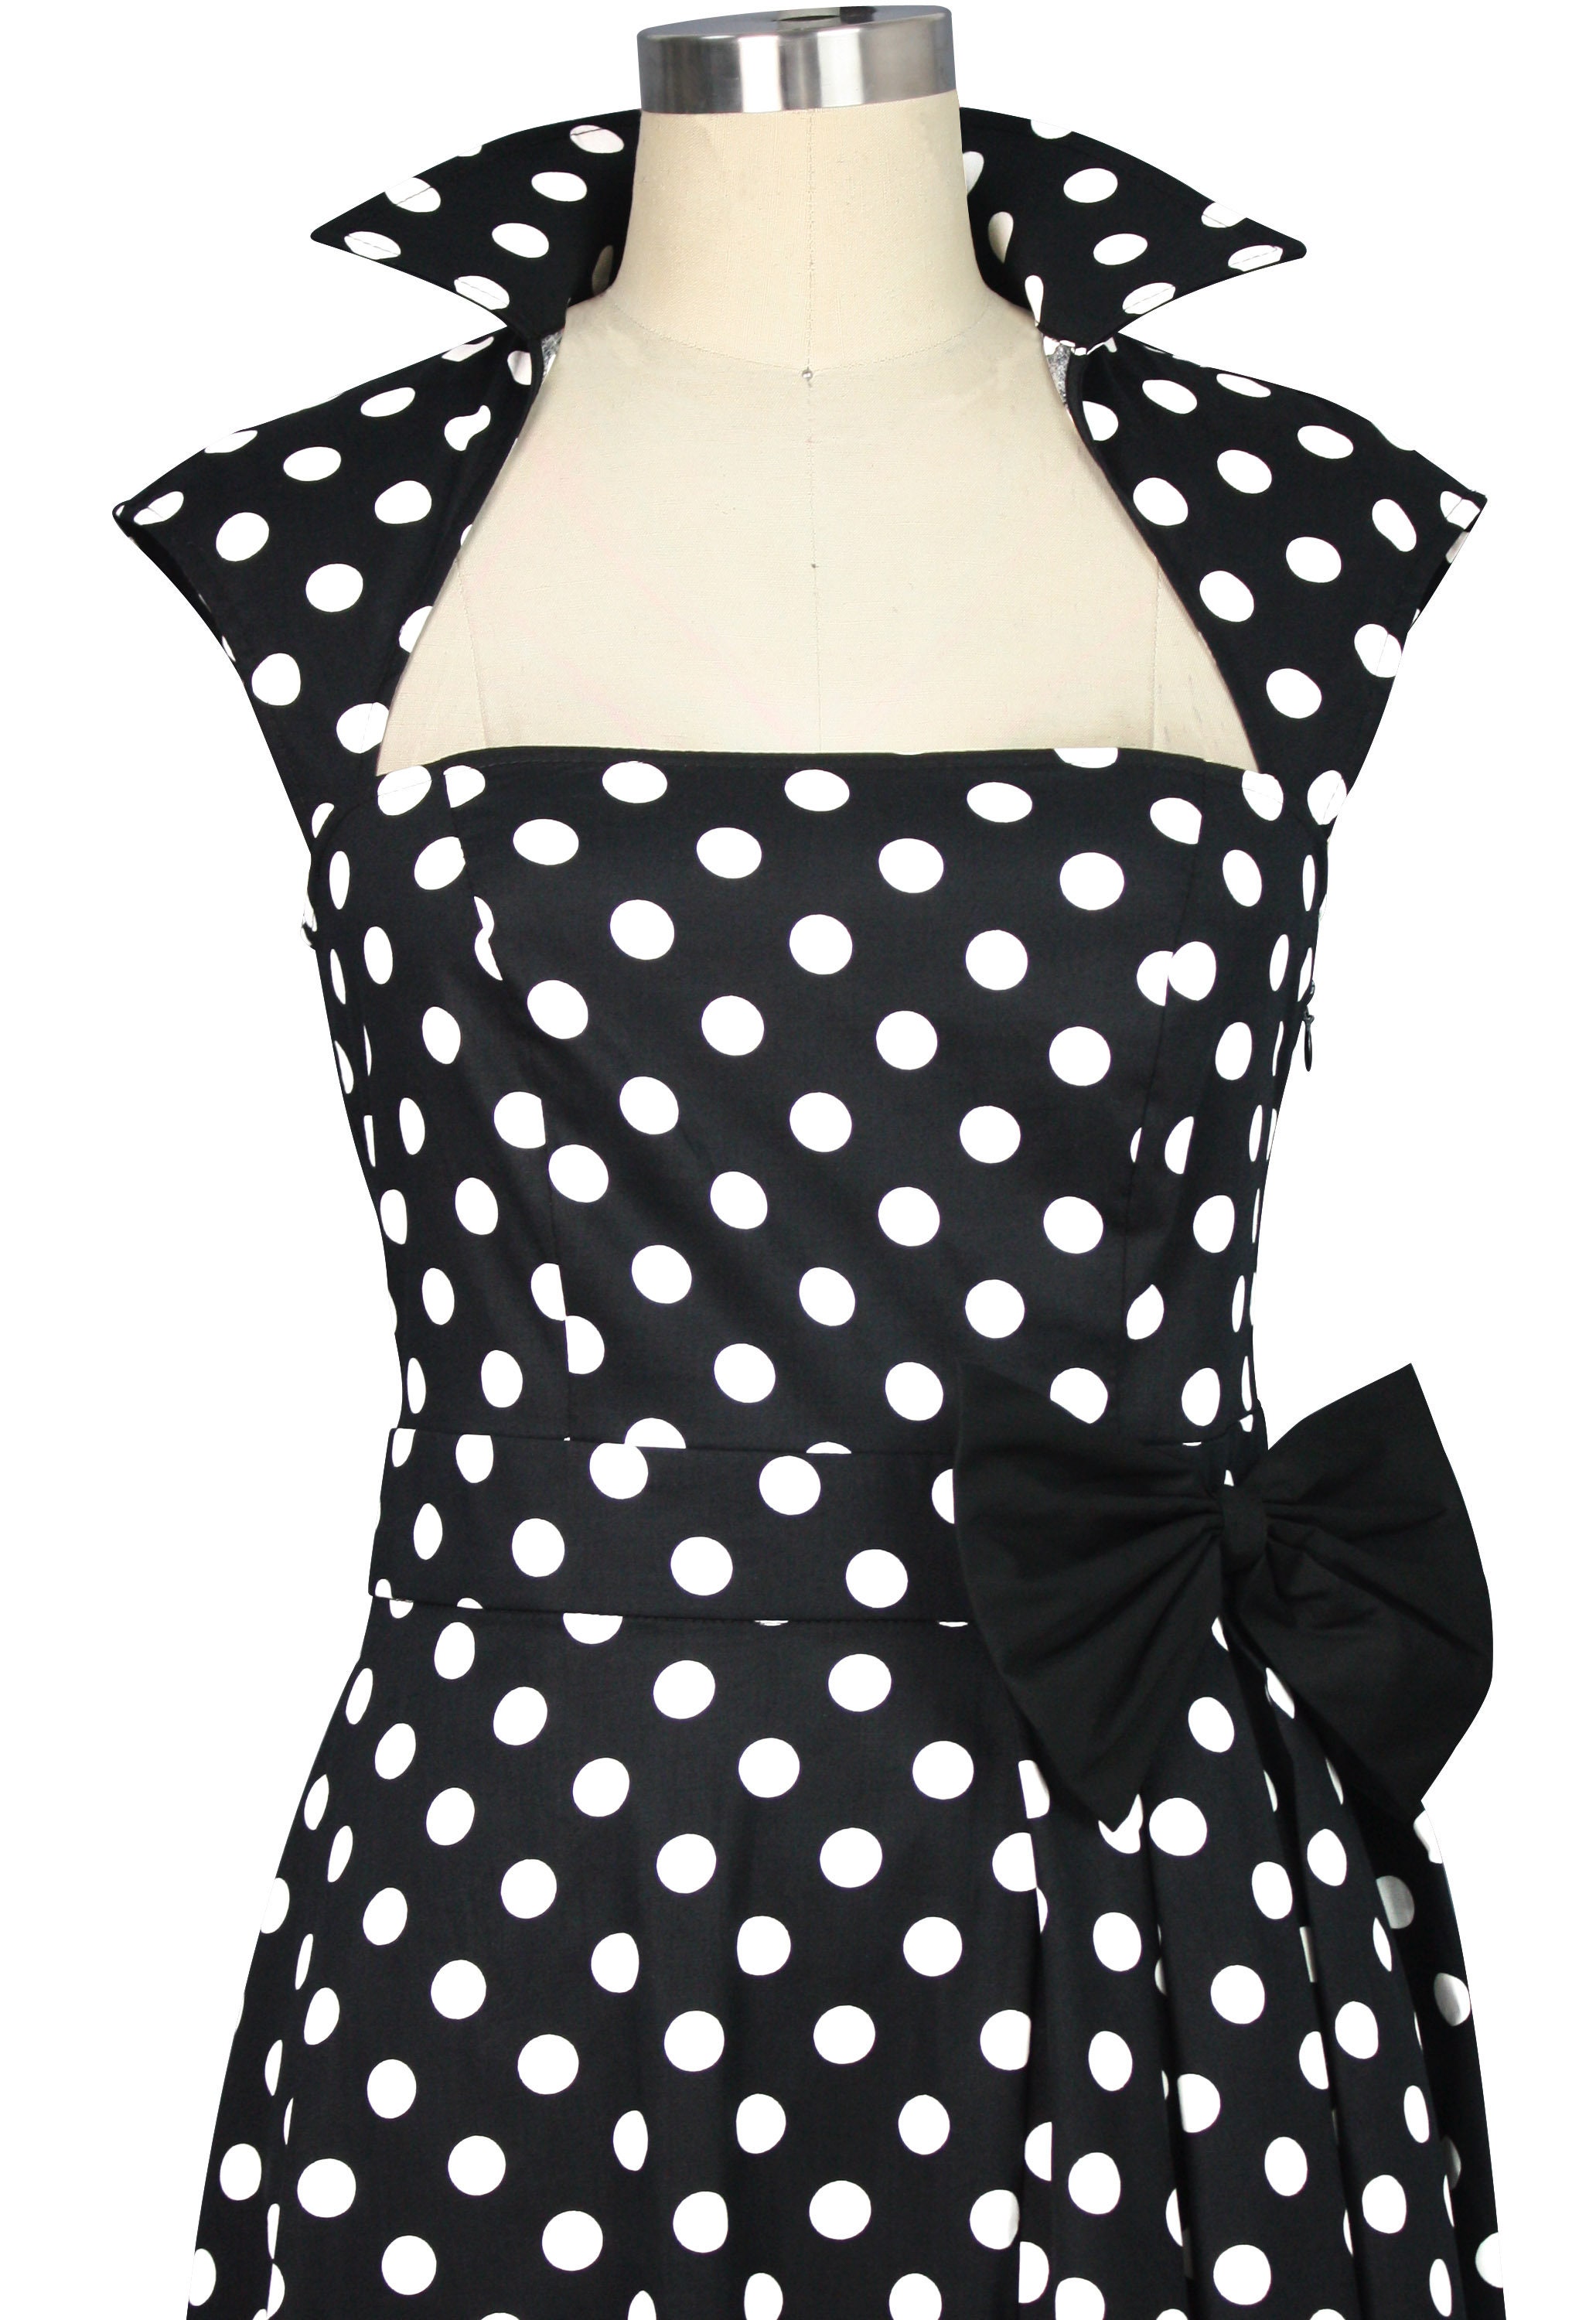 PLUS SIZE Audrey Hepburn Polkadot 50s Vintage Swing Dress | Etsy